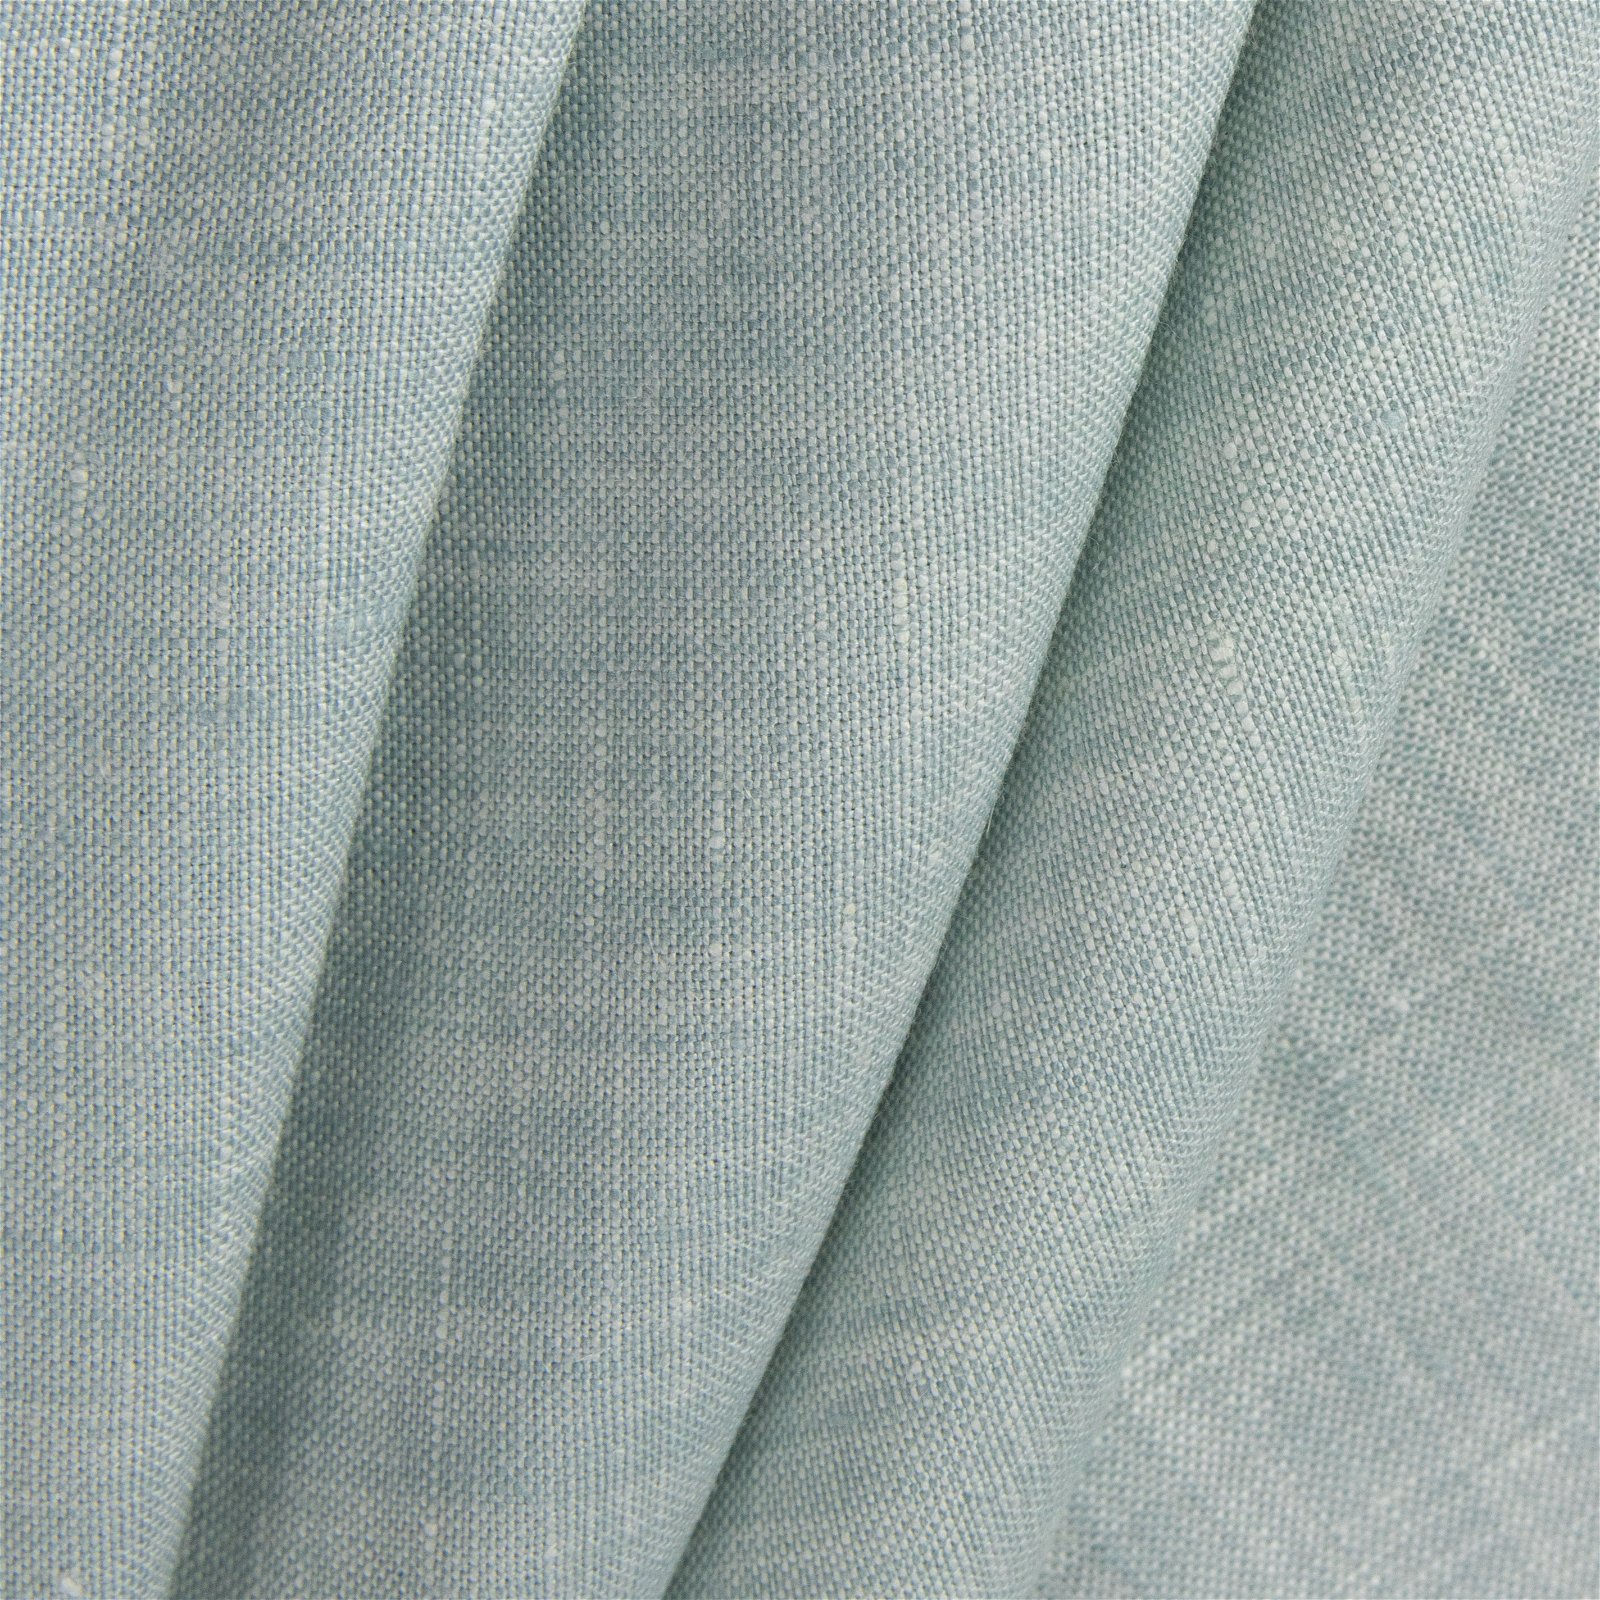 120 Ciel Sarasota Linen Fabric